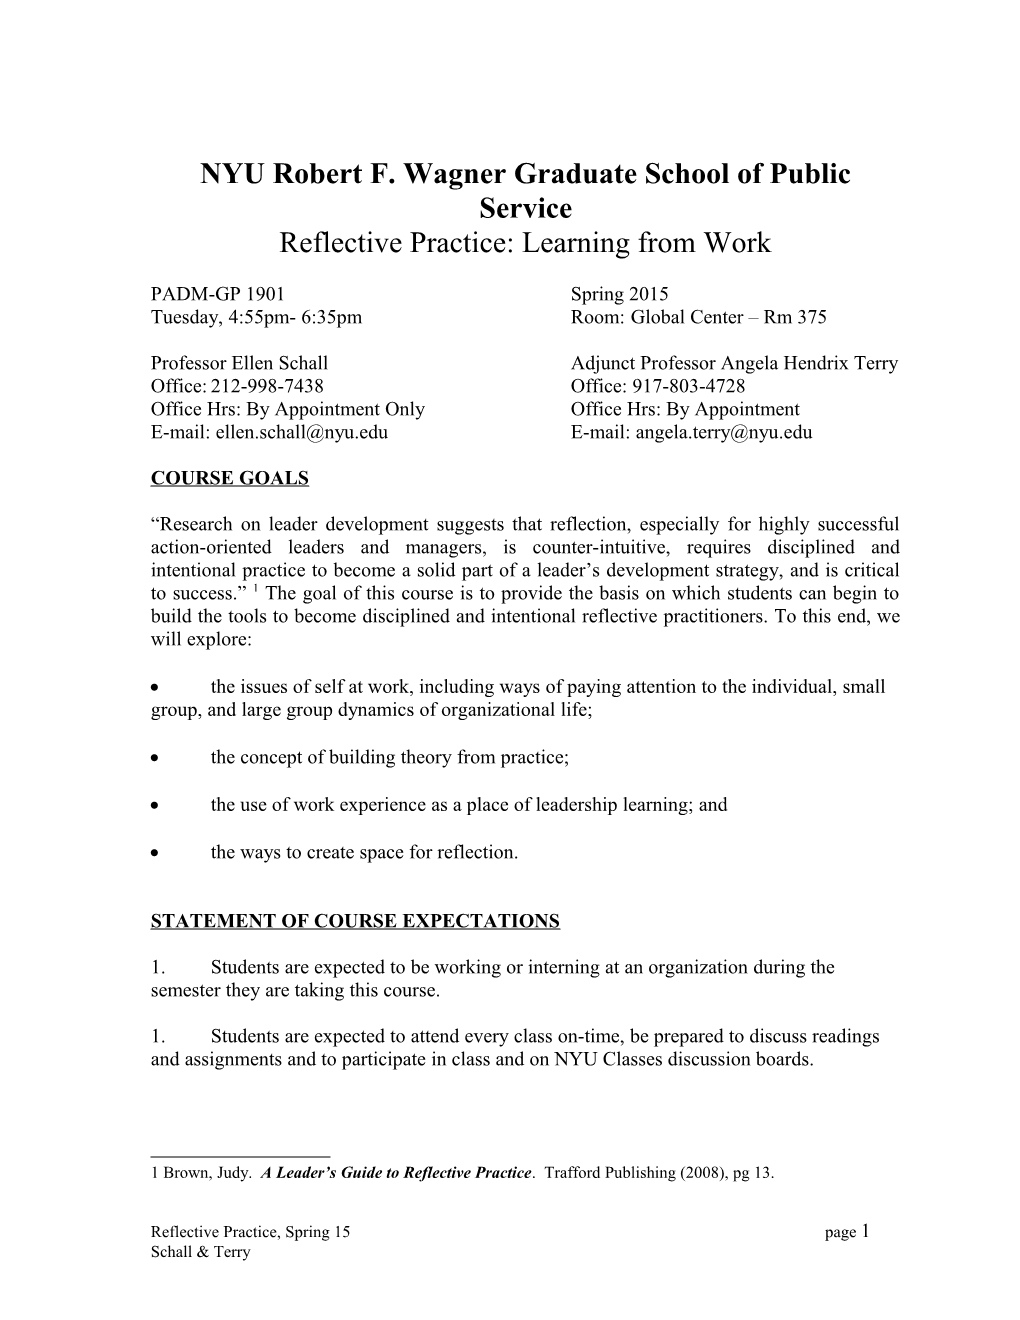 NYU Robert F. Wagner Graduate School of Public Service